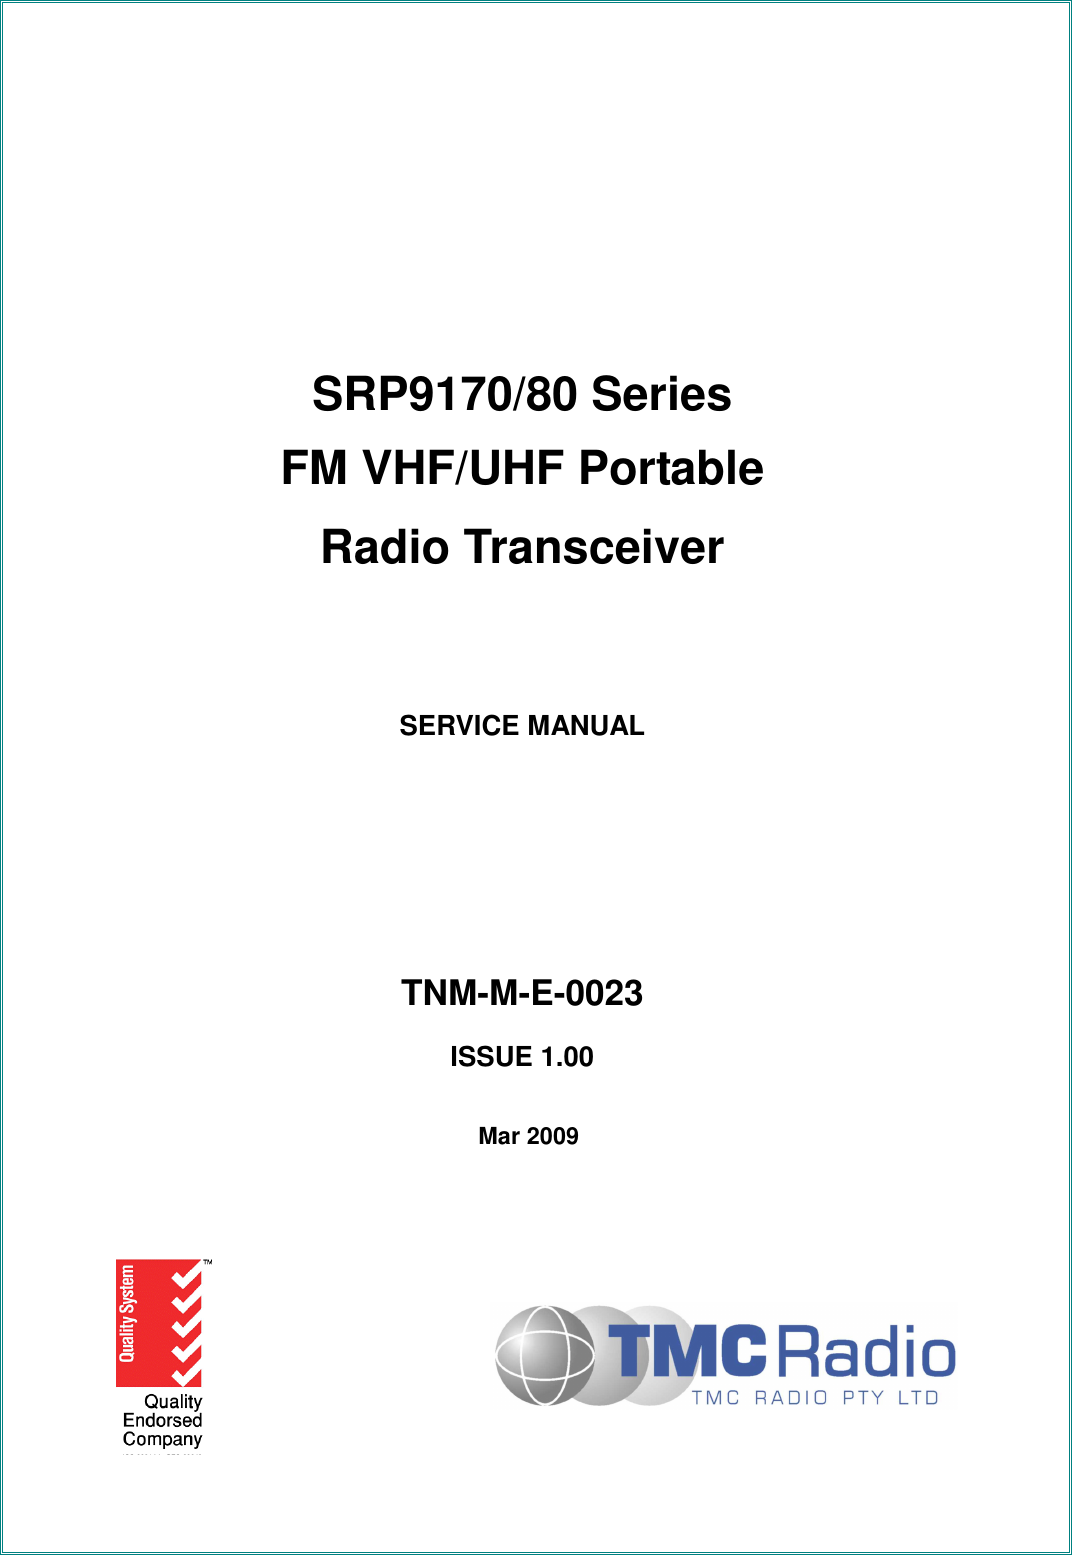            SRP9170/80 Series FM VHF/UHF Portable Radio Transceiver  SERVICE MANUAL      TNM-M-E-0023 ISSUE 1.00   Mar 2009  